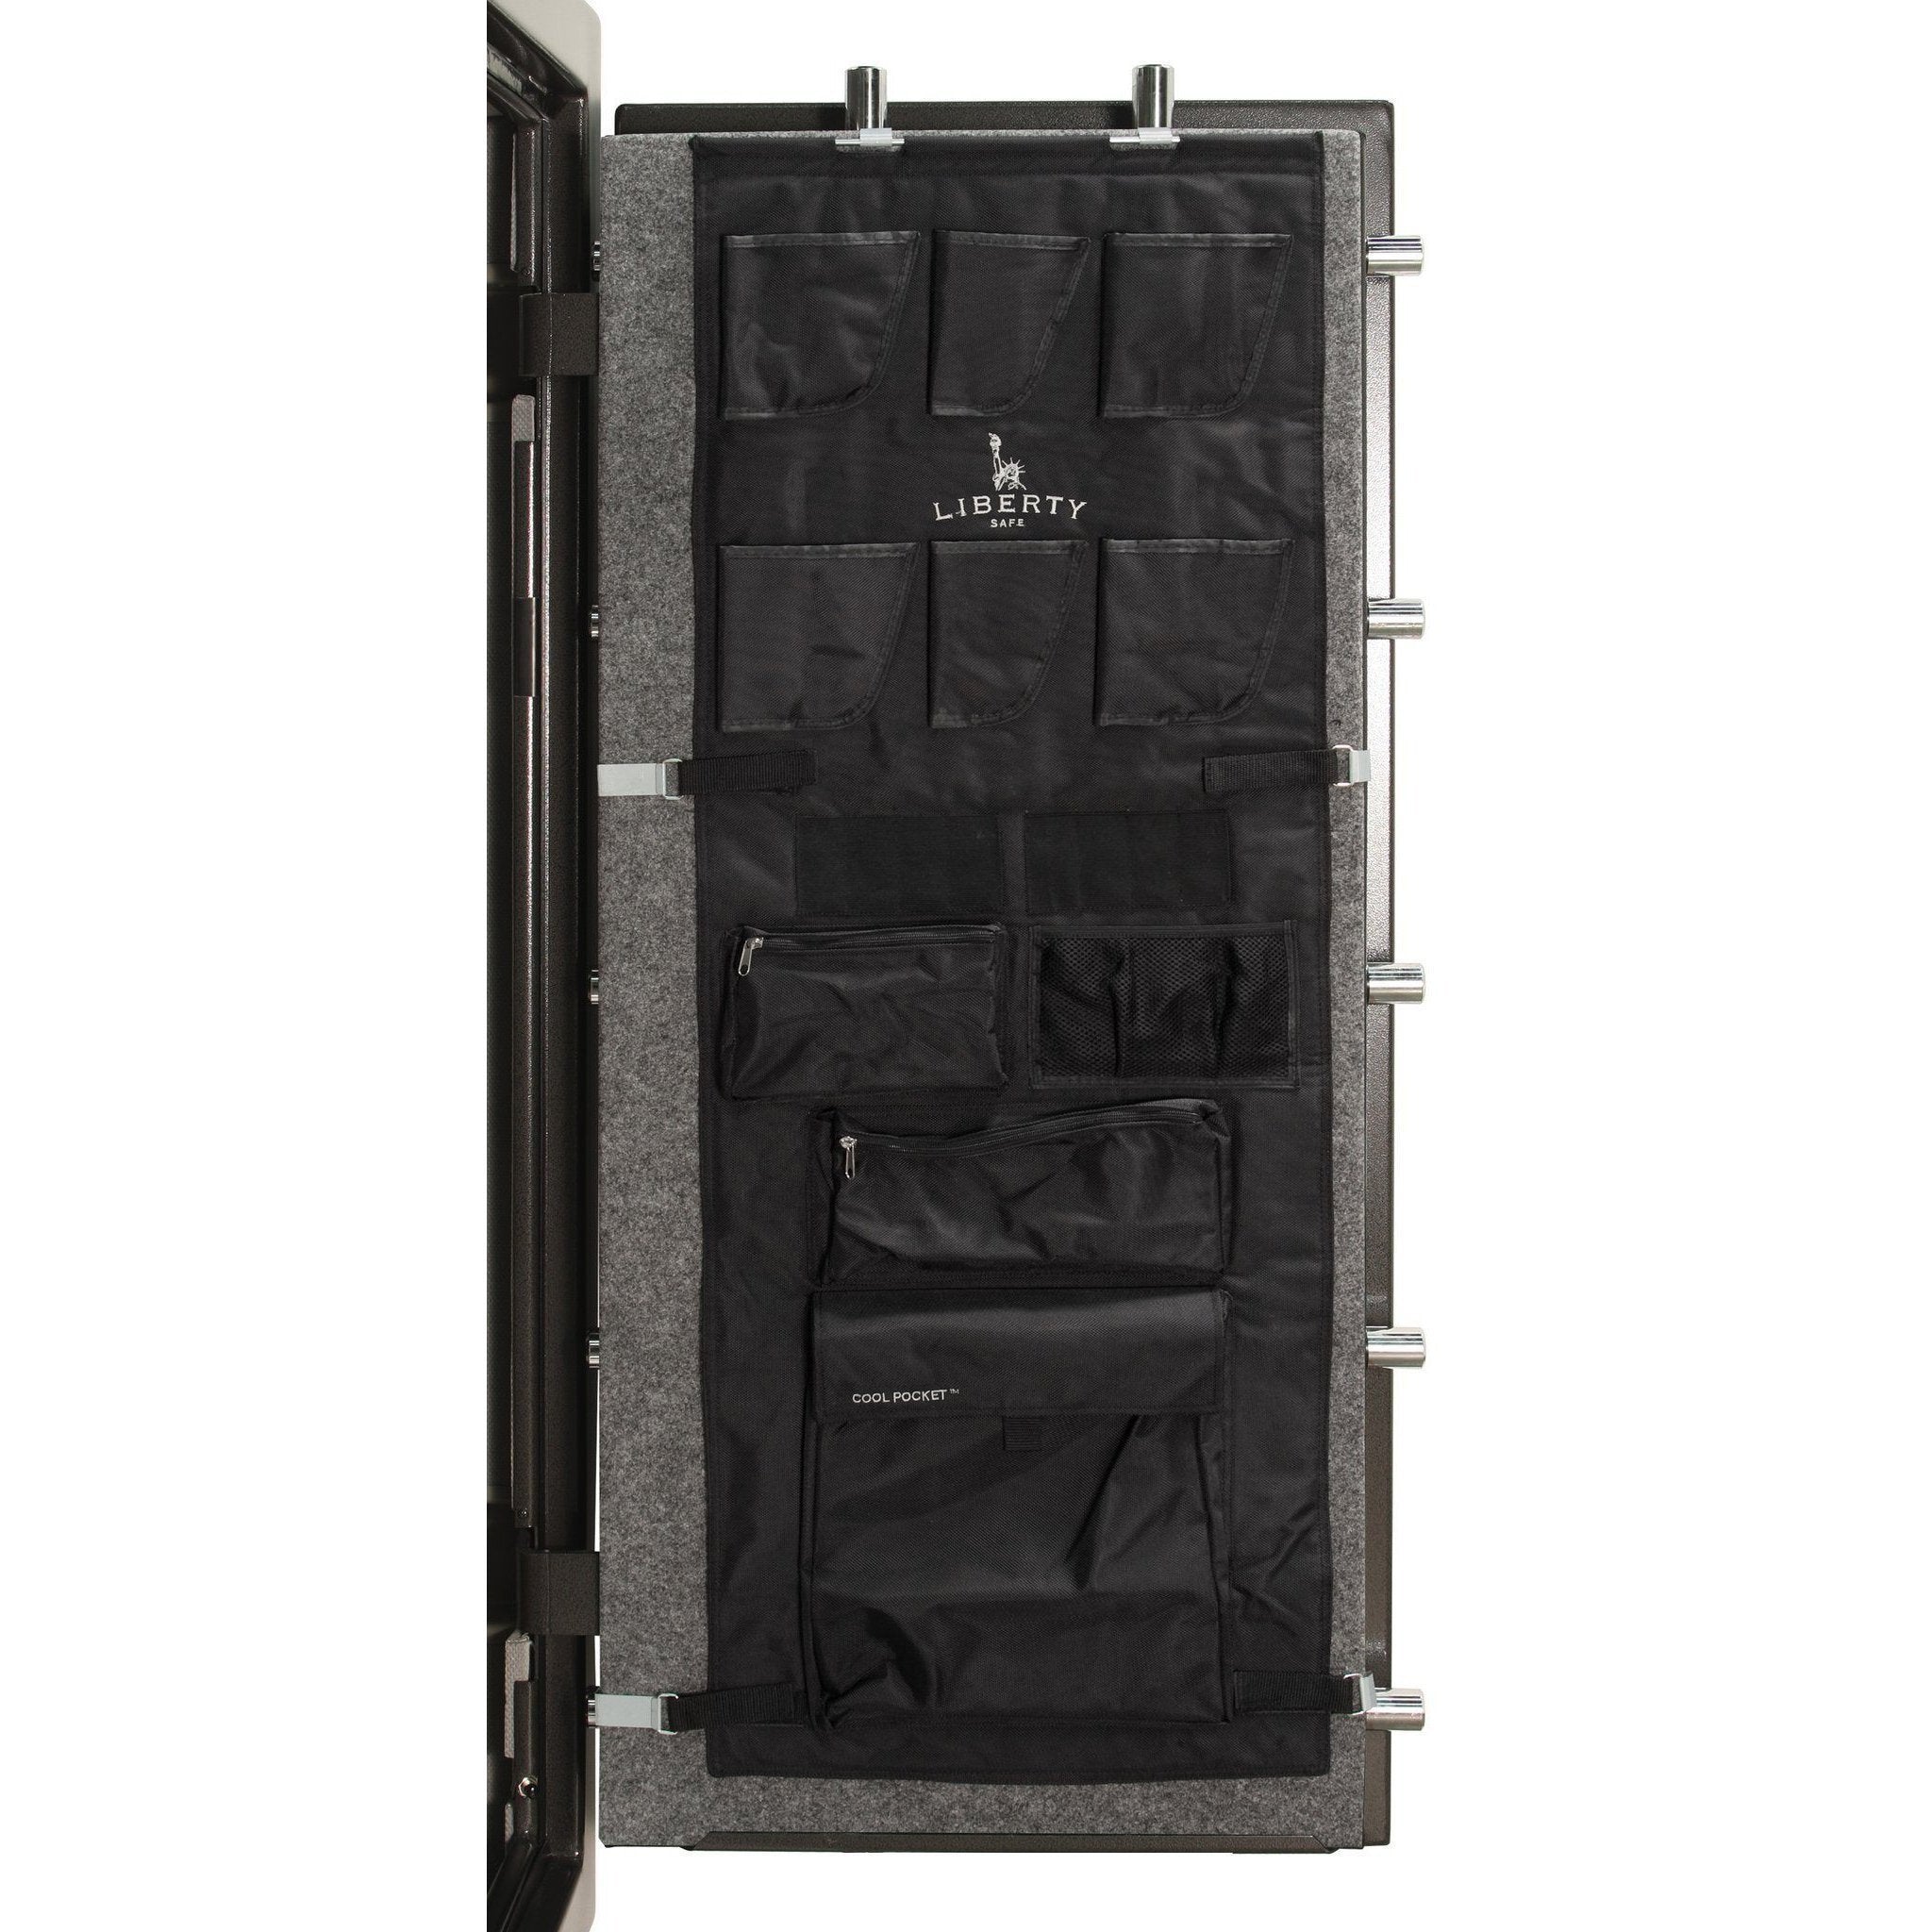 Accessory - Storage - Door Panel - 20-23-25 size safes, photo 1